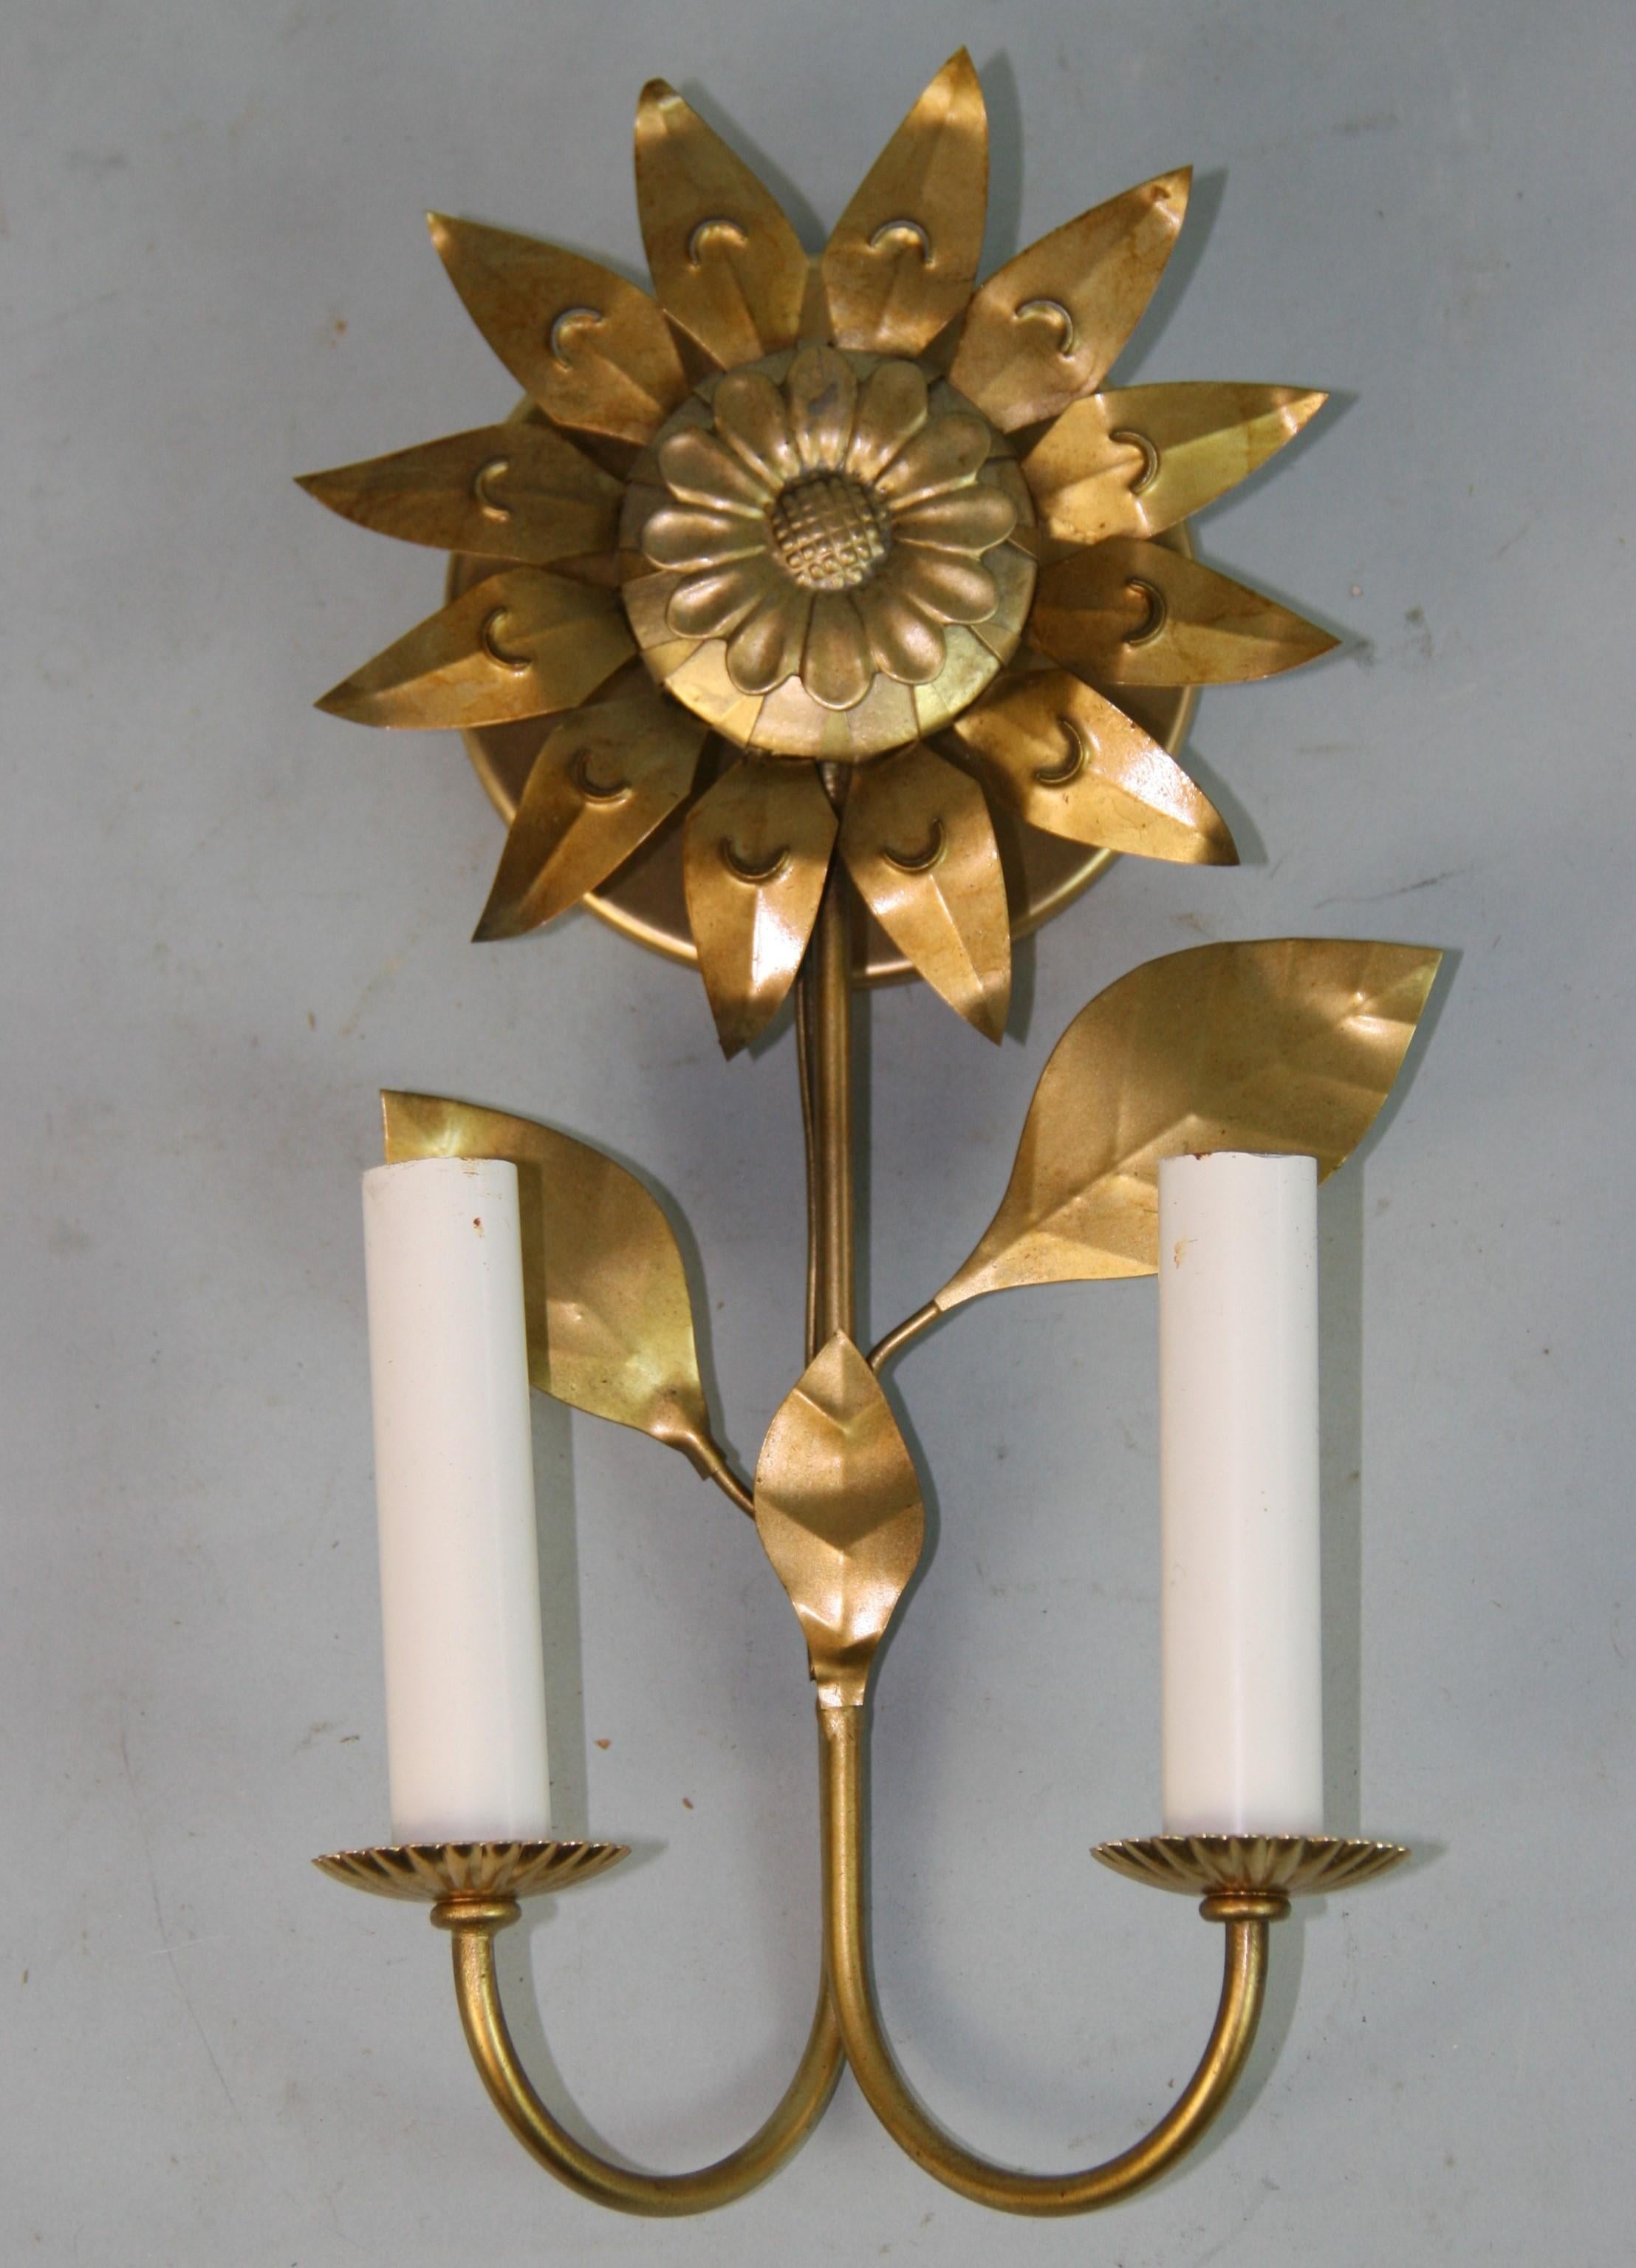 1568 Pair French 2 light sunflower sconces
Takes 40 watt candelabra based bulb
Rewired for US